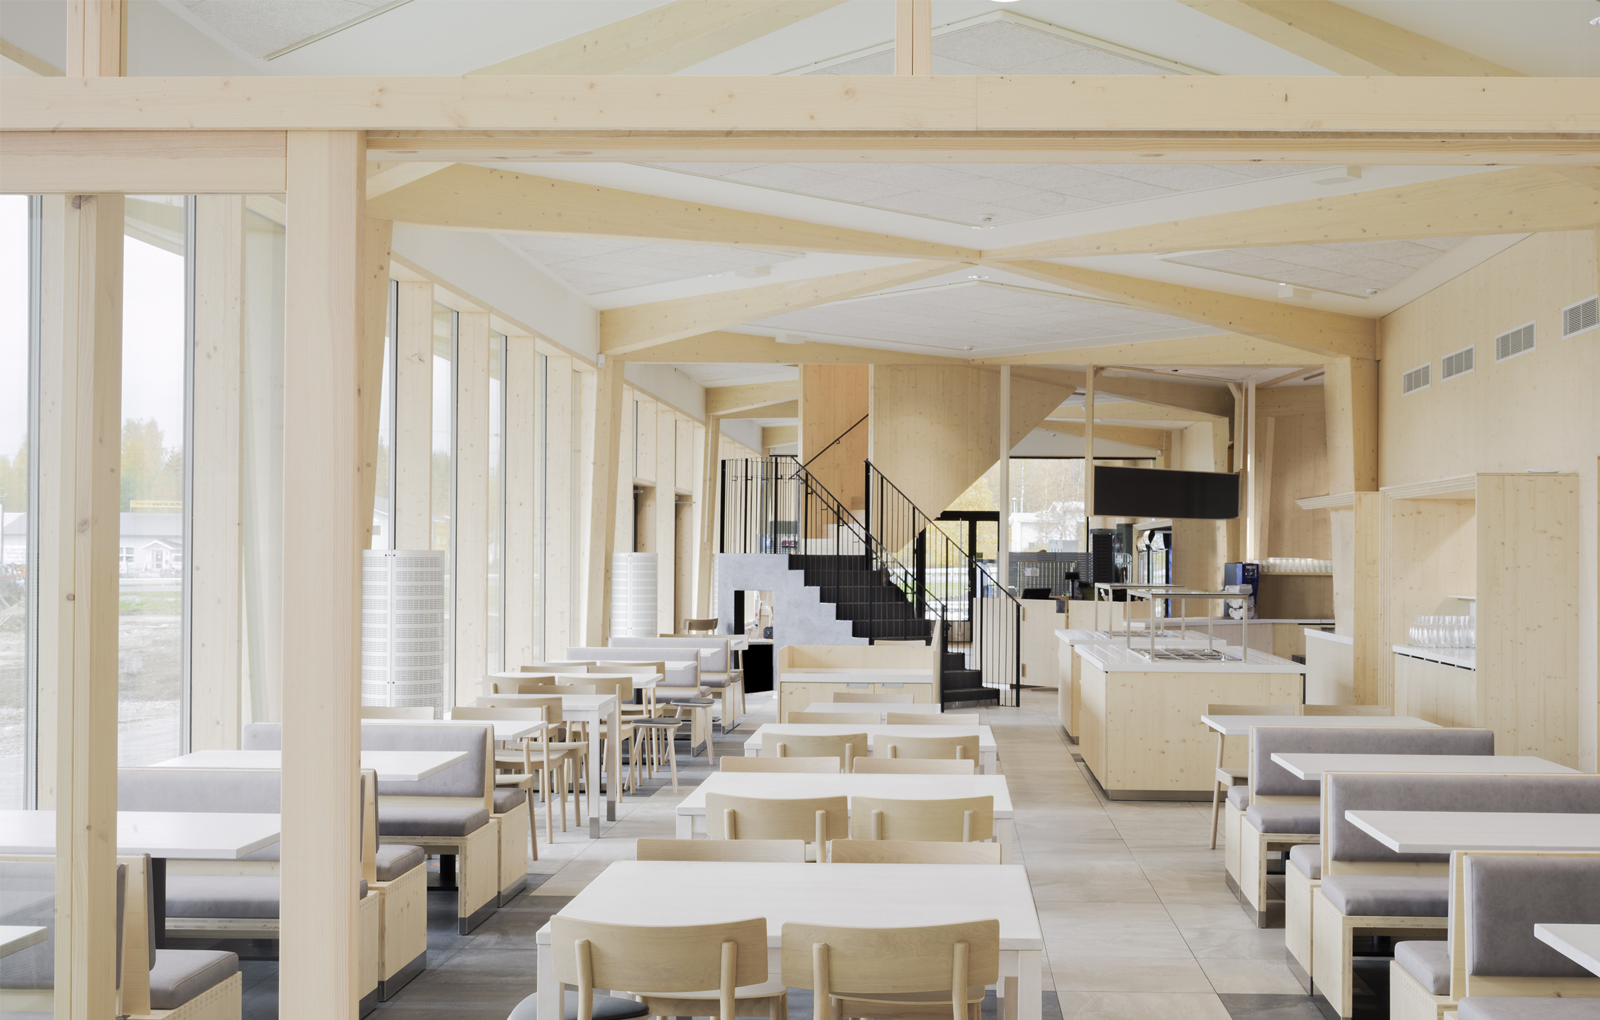 Rest Area Niemenharju main building wooden interior restaurant dining area Designed by Studio Puisto Architects